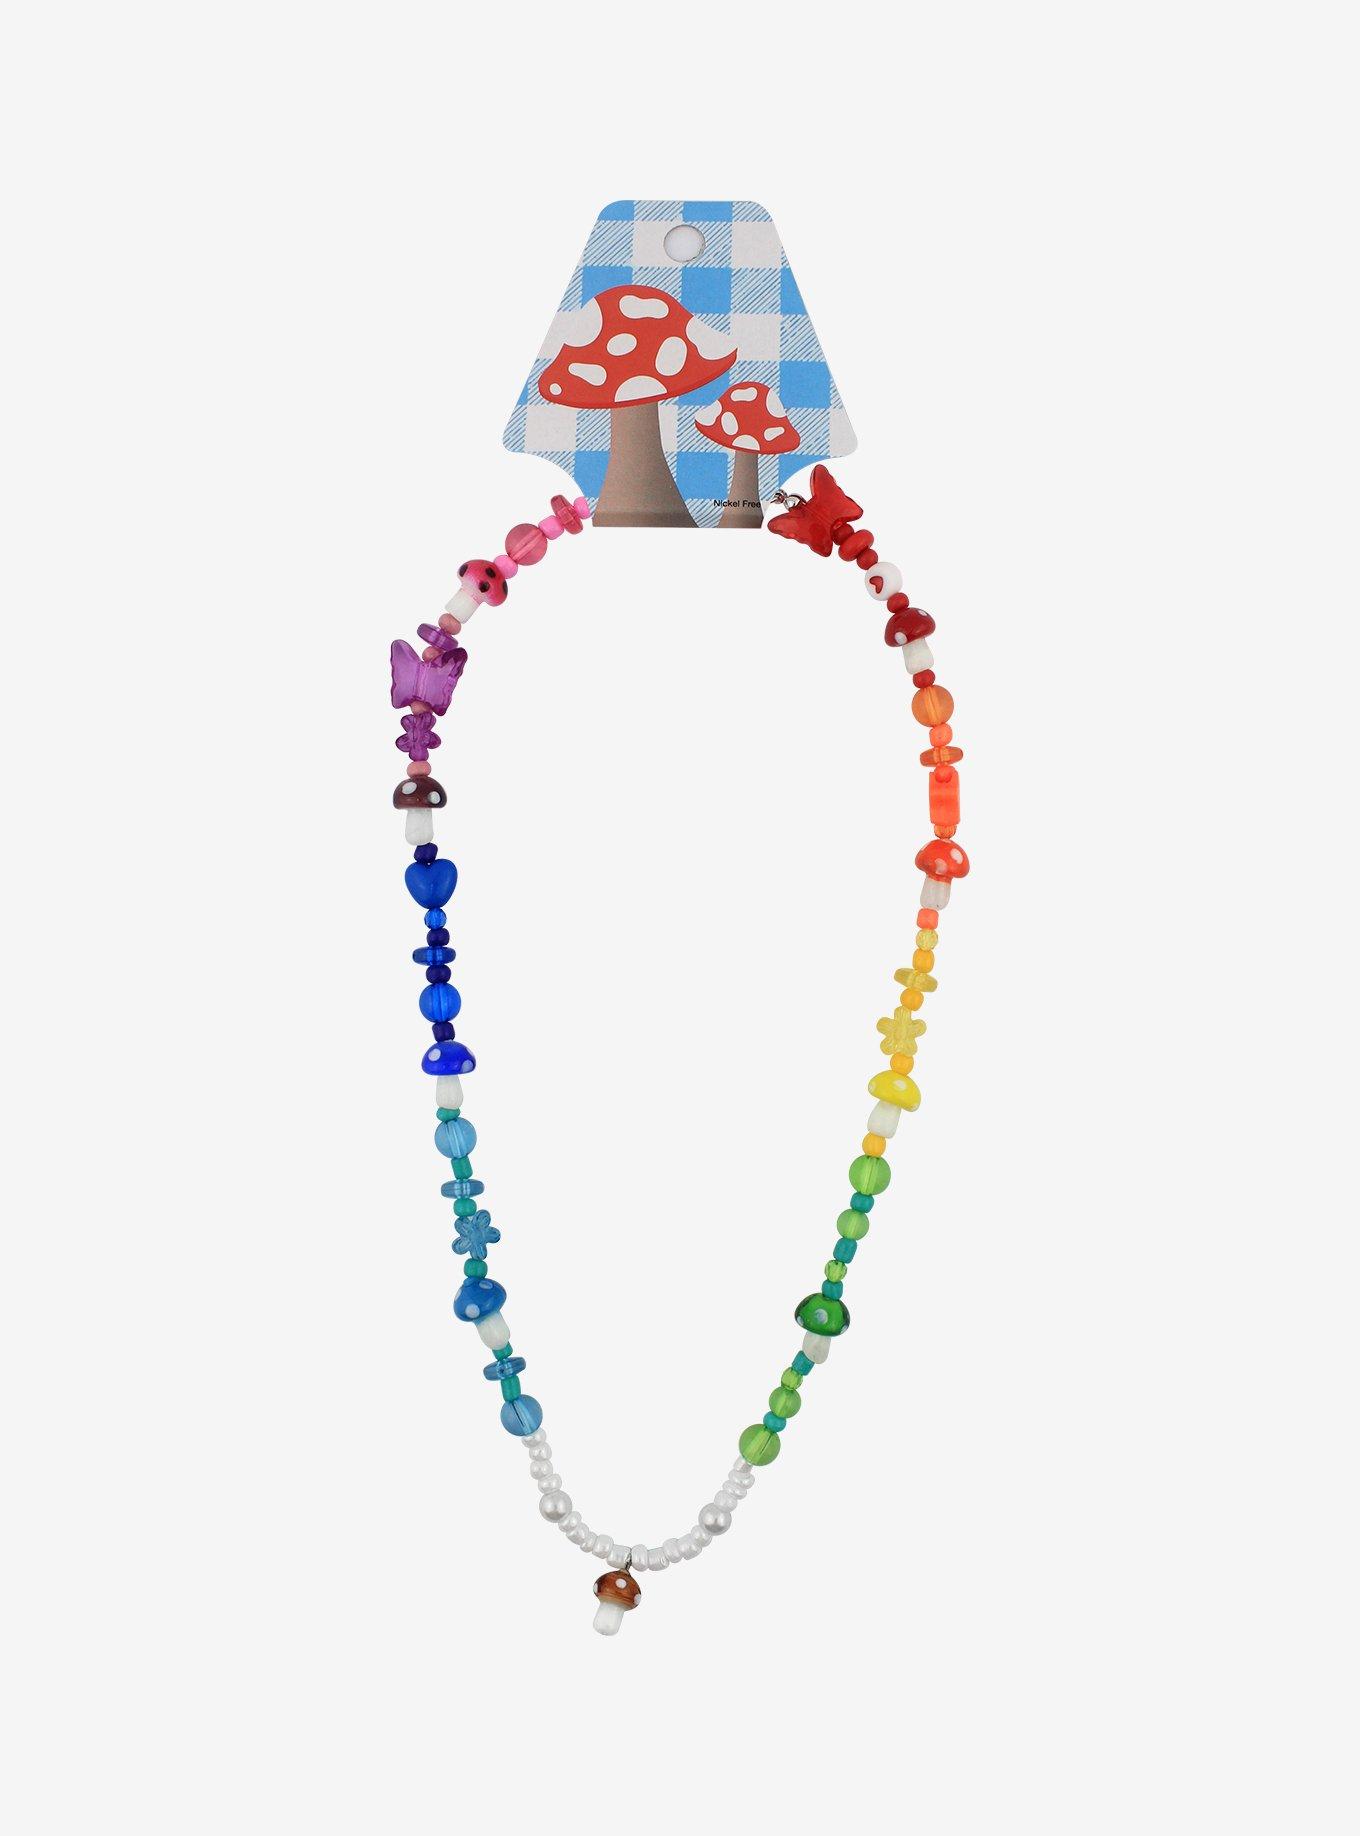 Rainbow Mushroom Charms Necklace 